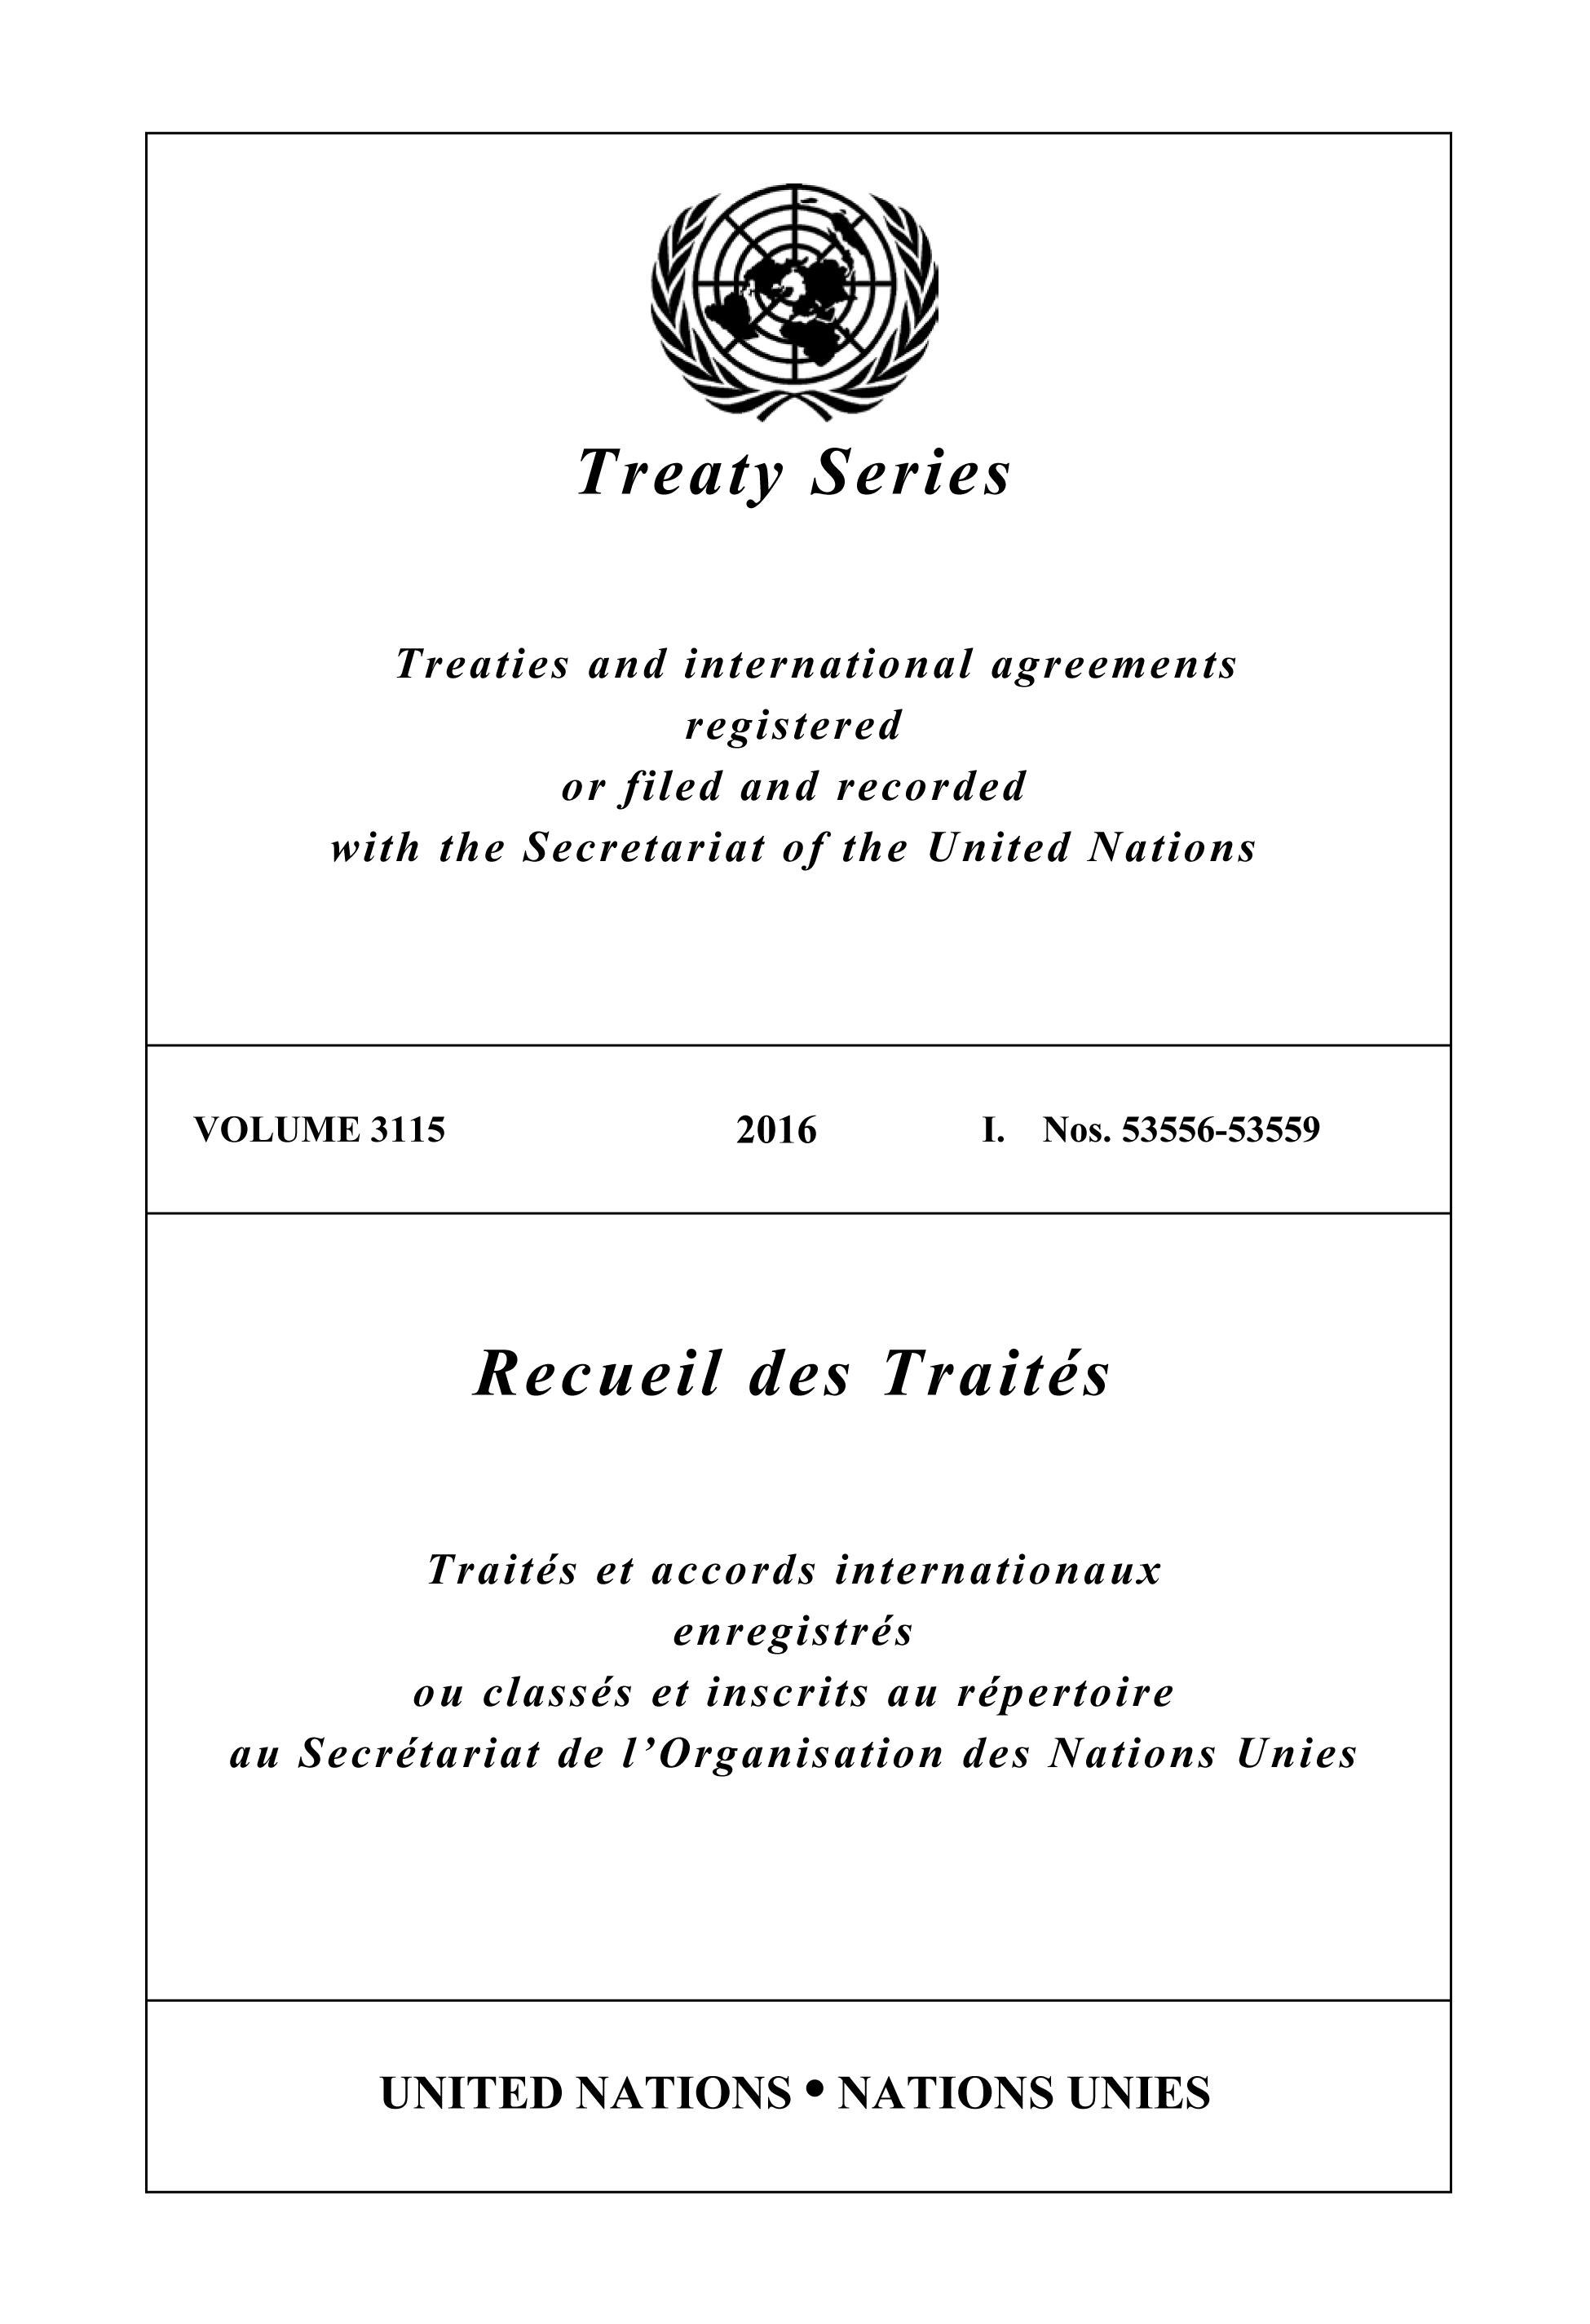 image of Treaty Series 3115